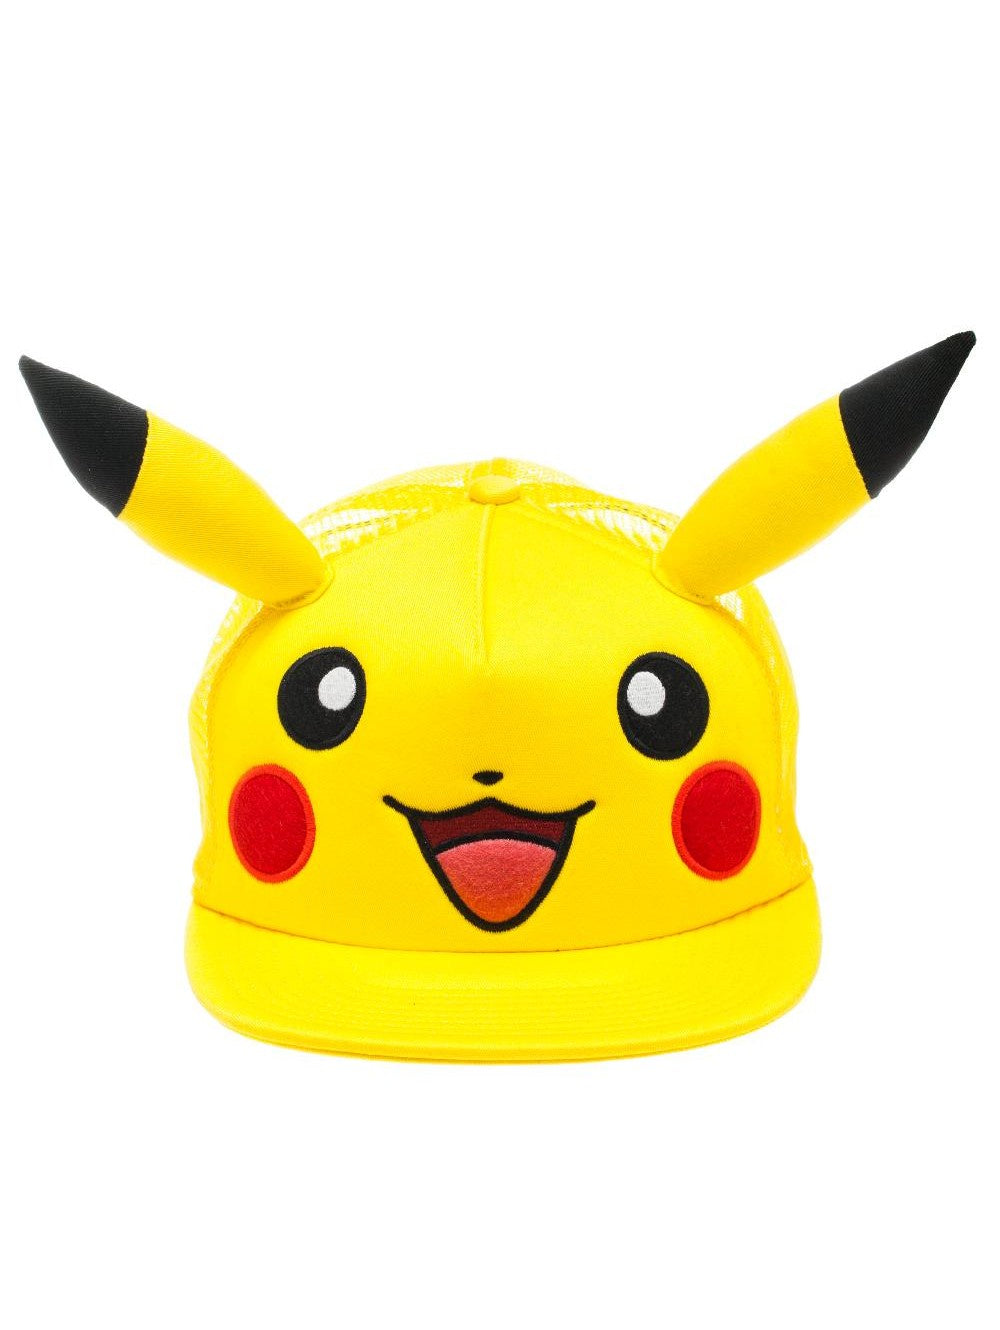 POKEMON - Pikachu Big Face Cap with Ears Yellow